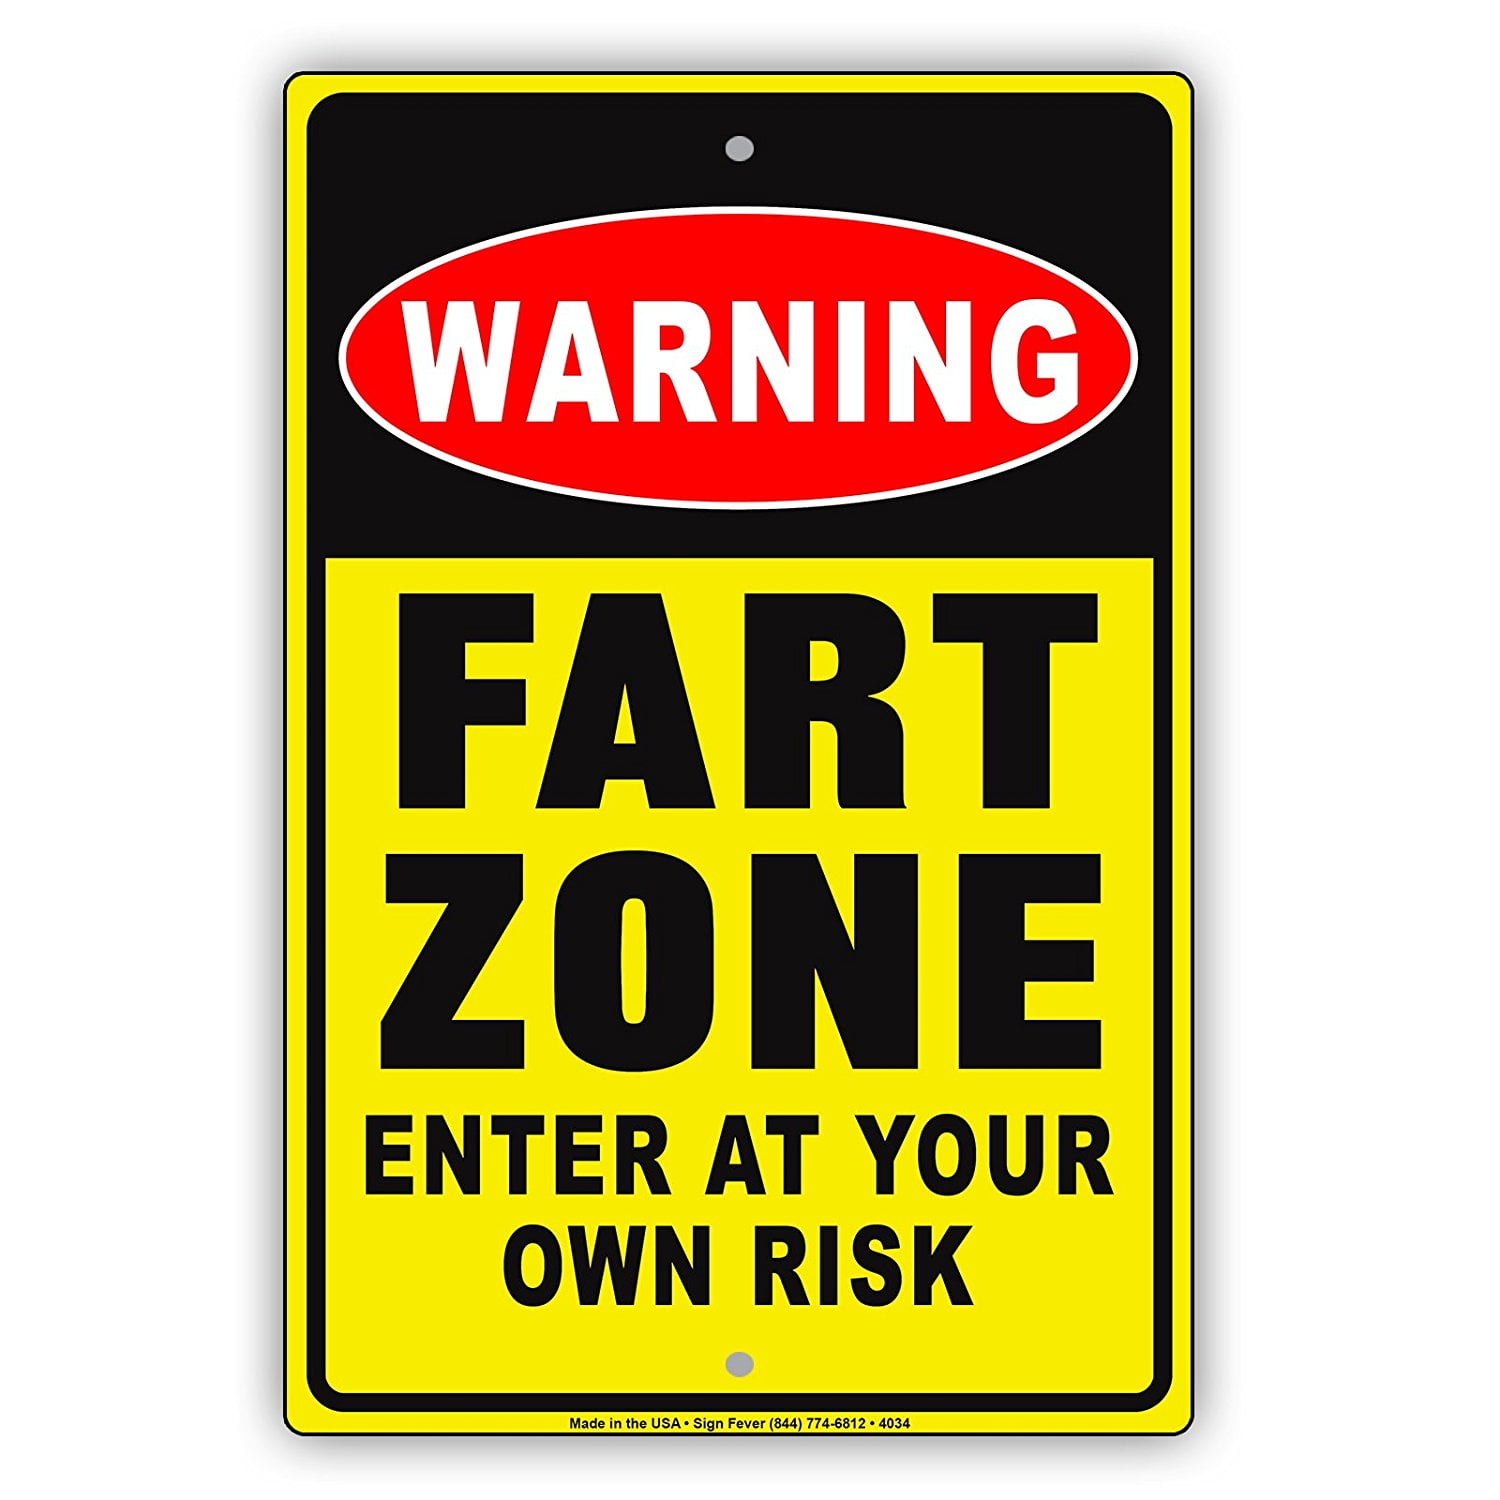 WARNING Fart Enter At Your Risk Humor Gag Funny Alert Caution Notice Aluminum Metal Sign 8"x12" - Walmart.com